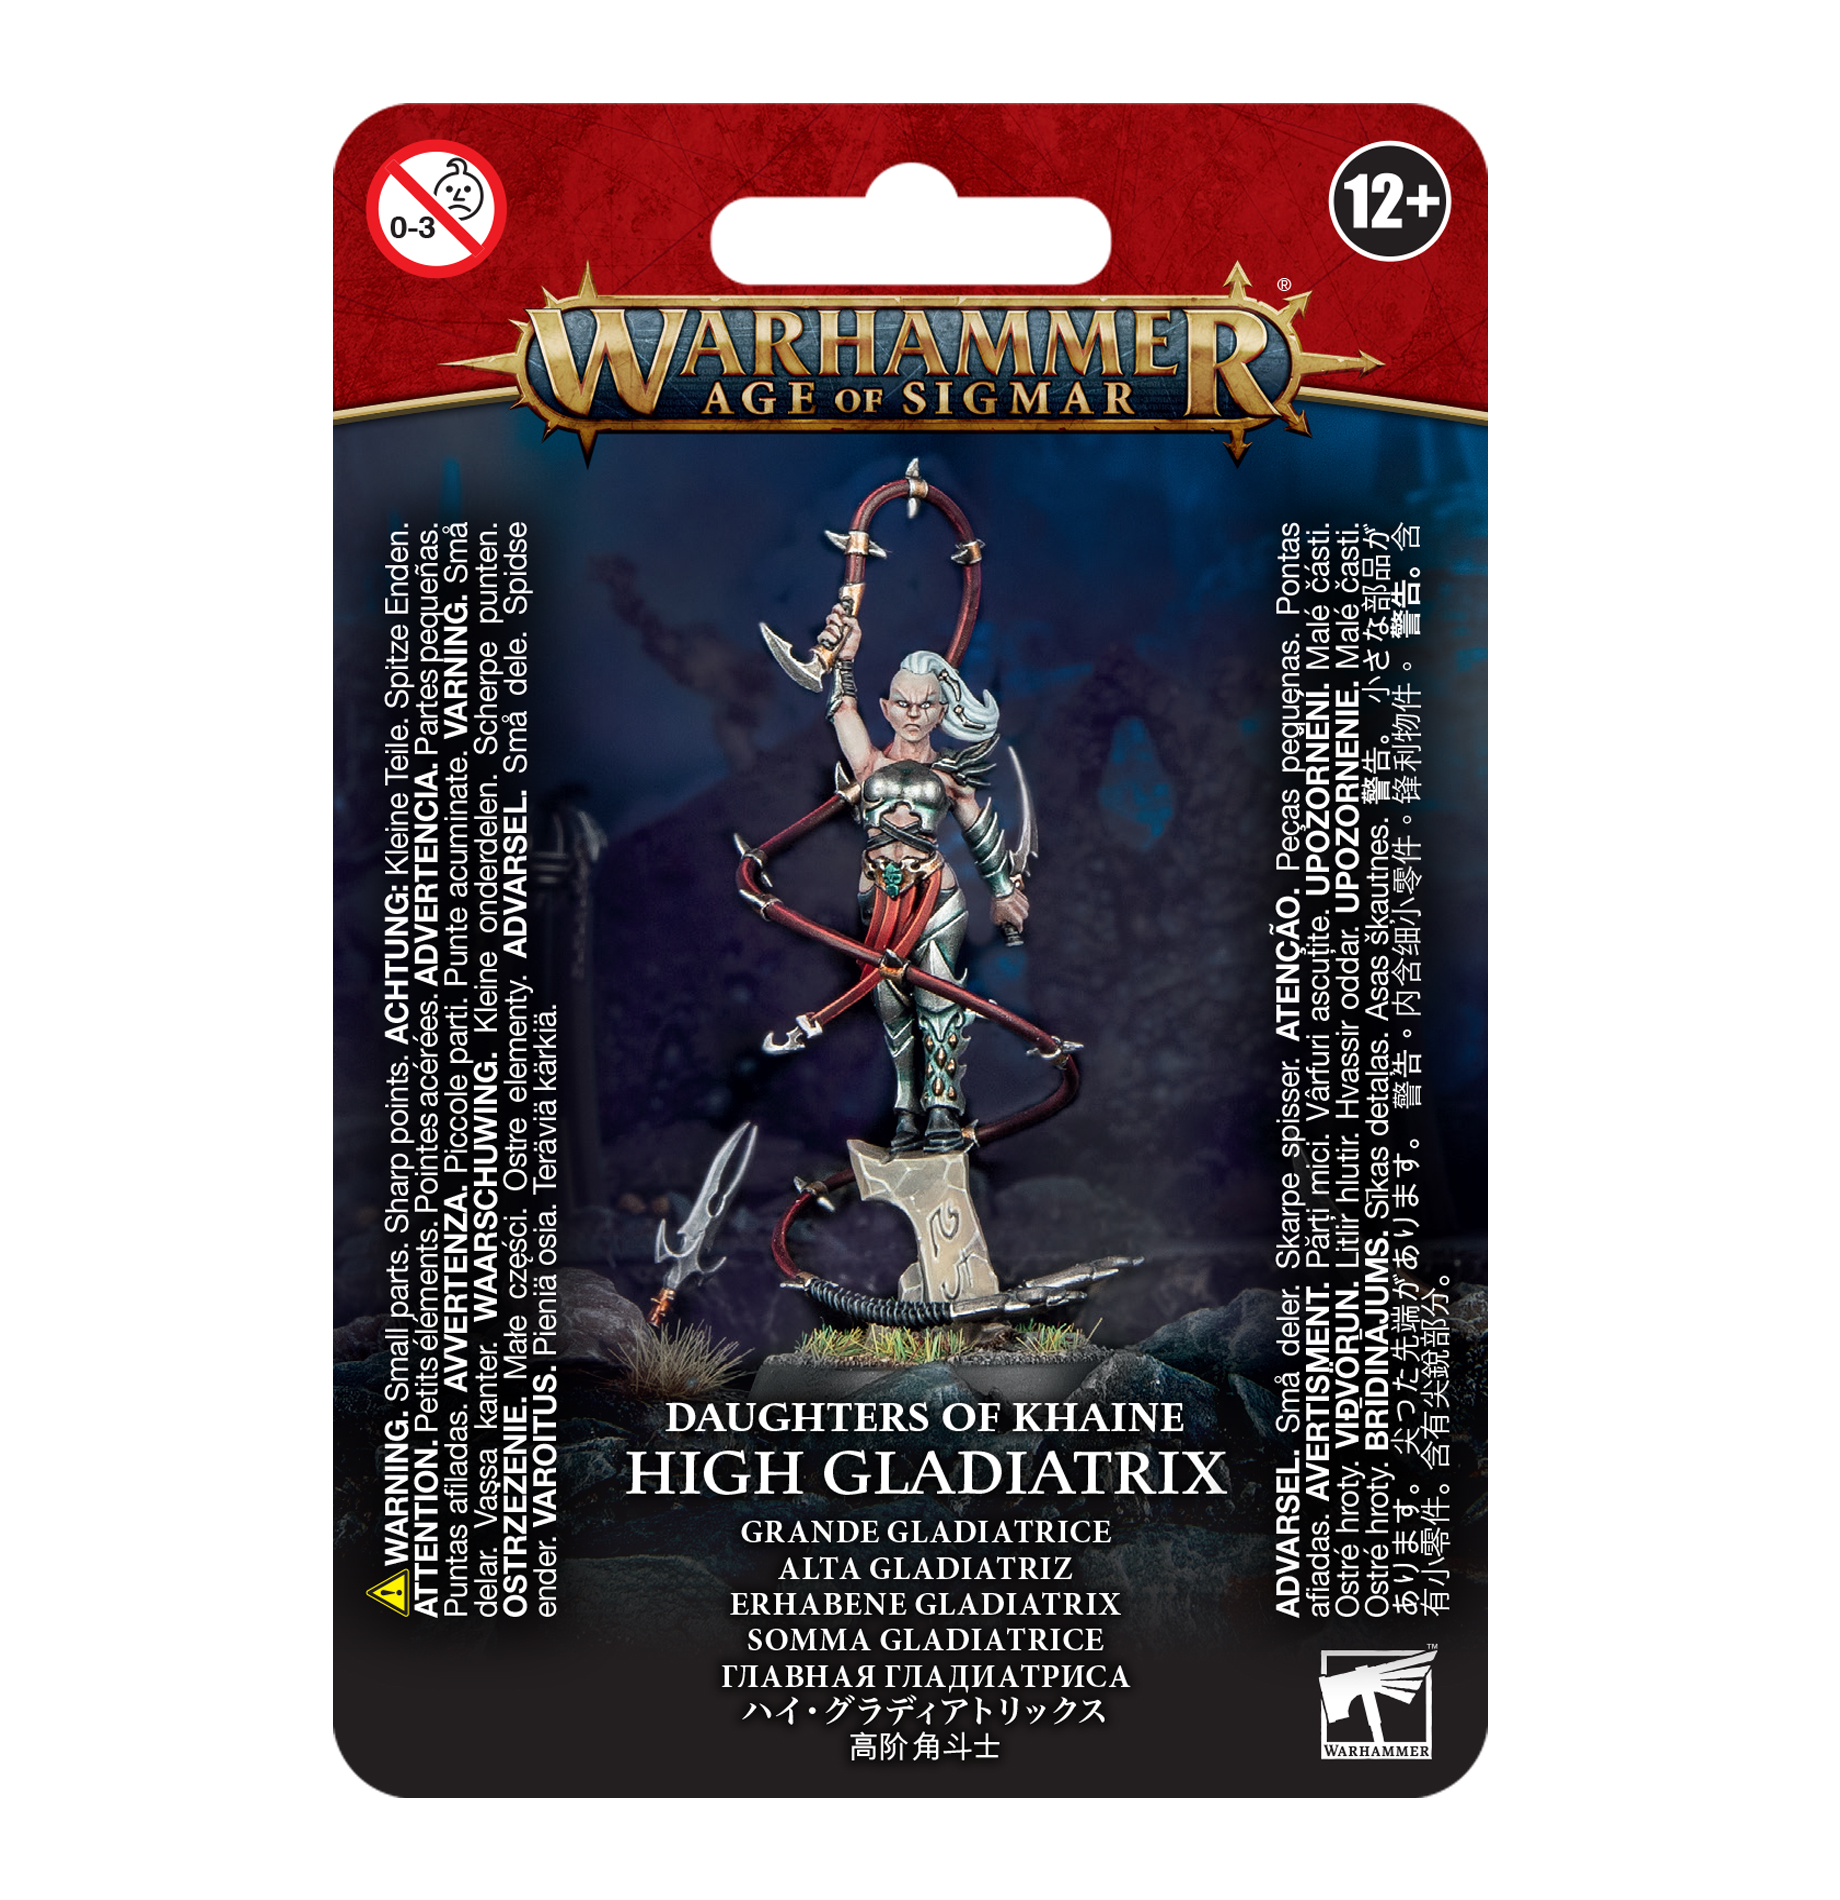 High Gladiatrix - 85-33 - Daughters of Khaine - Warhammer Age of Sigmar